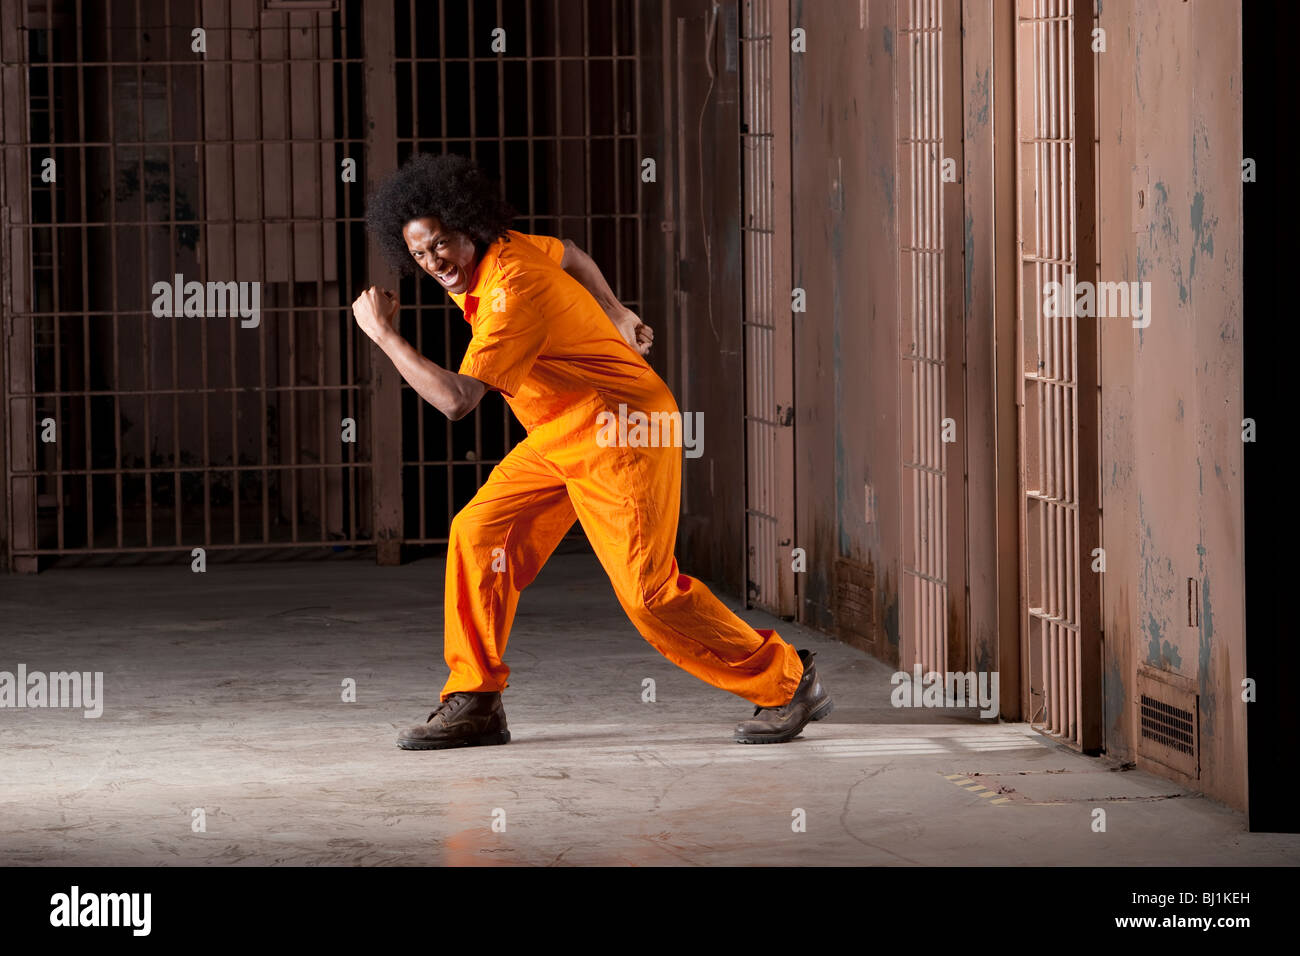 6,100+ Prison Escape Stock Photos, Pictures & Royalty-Free Images